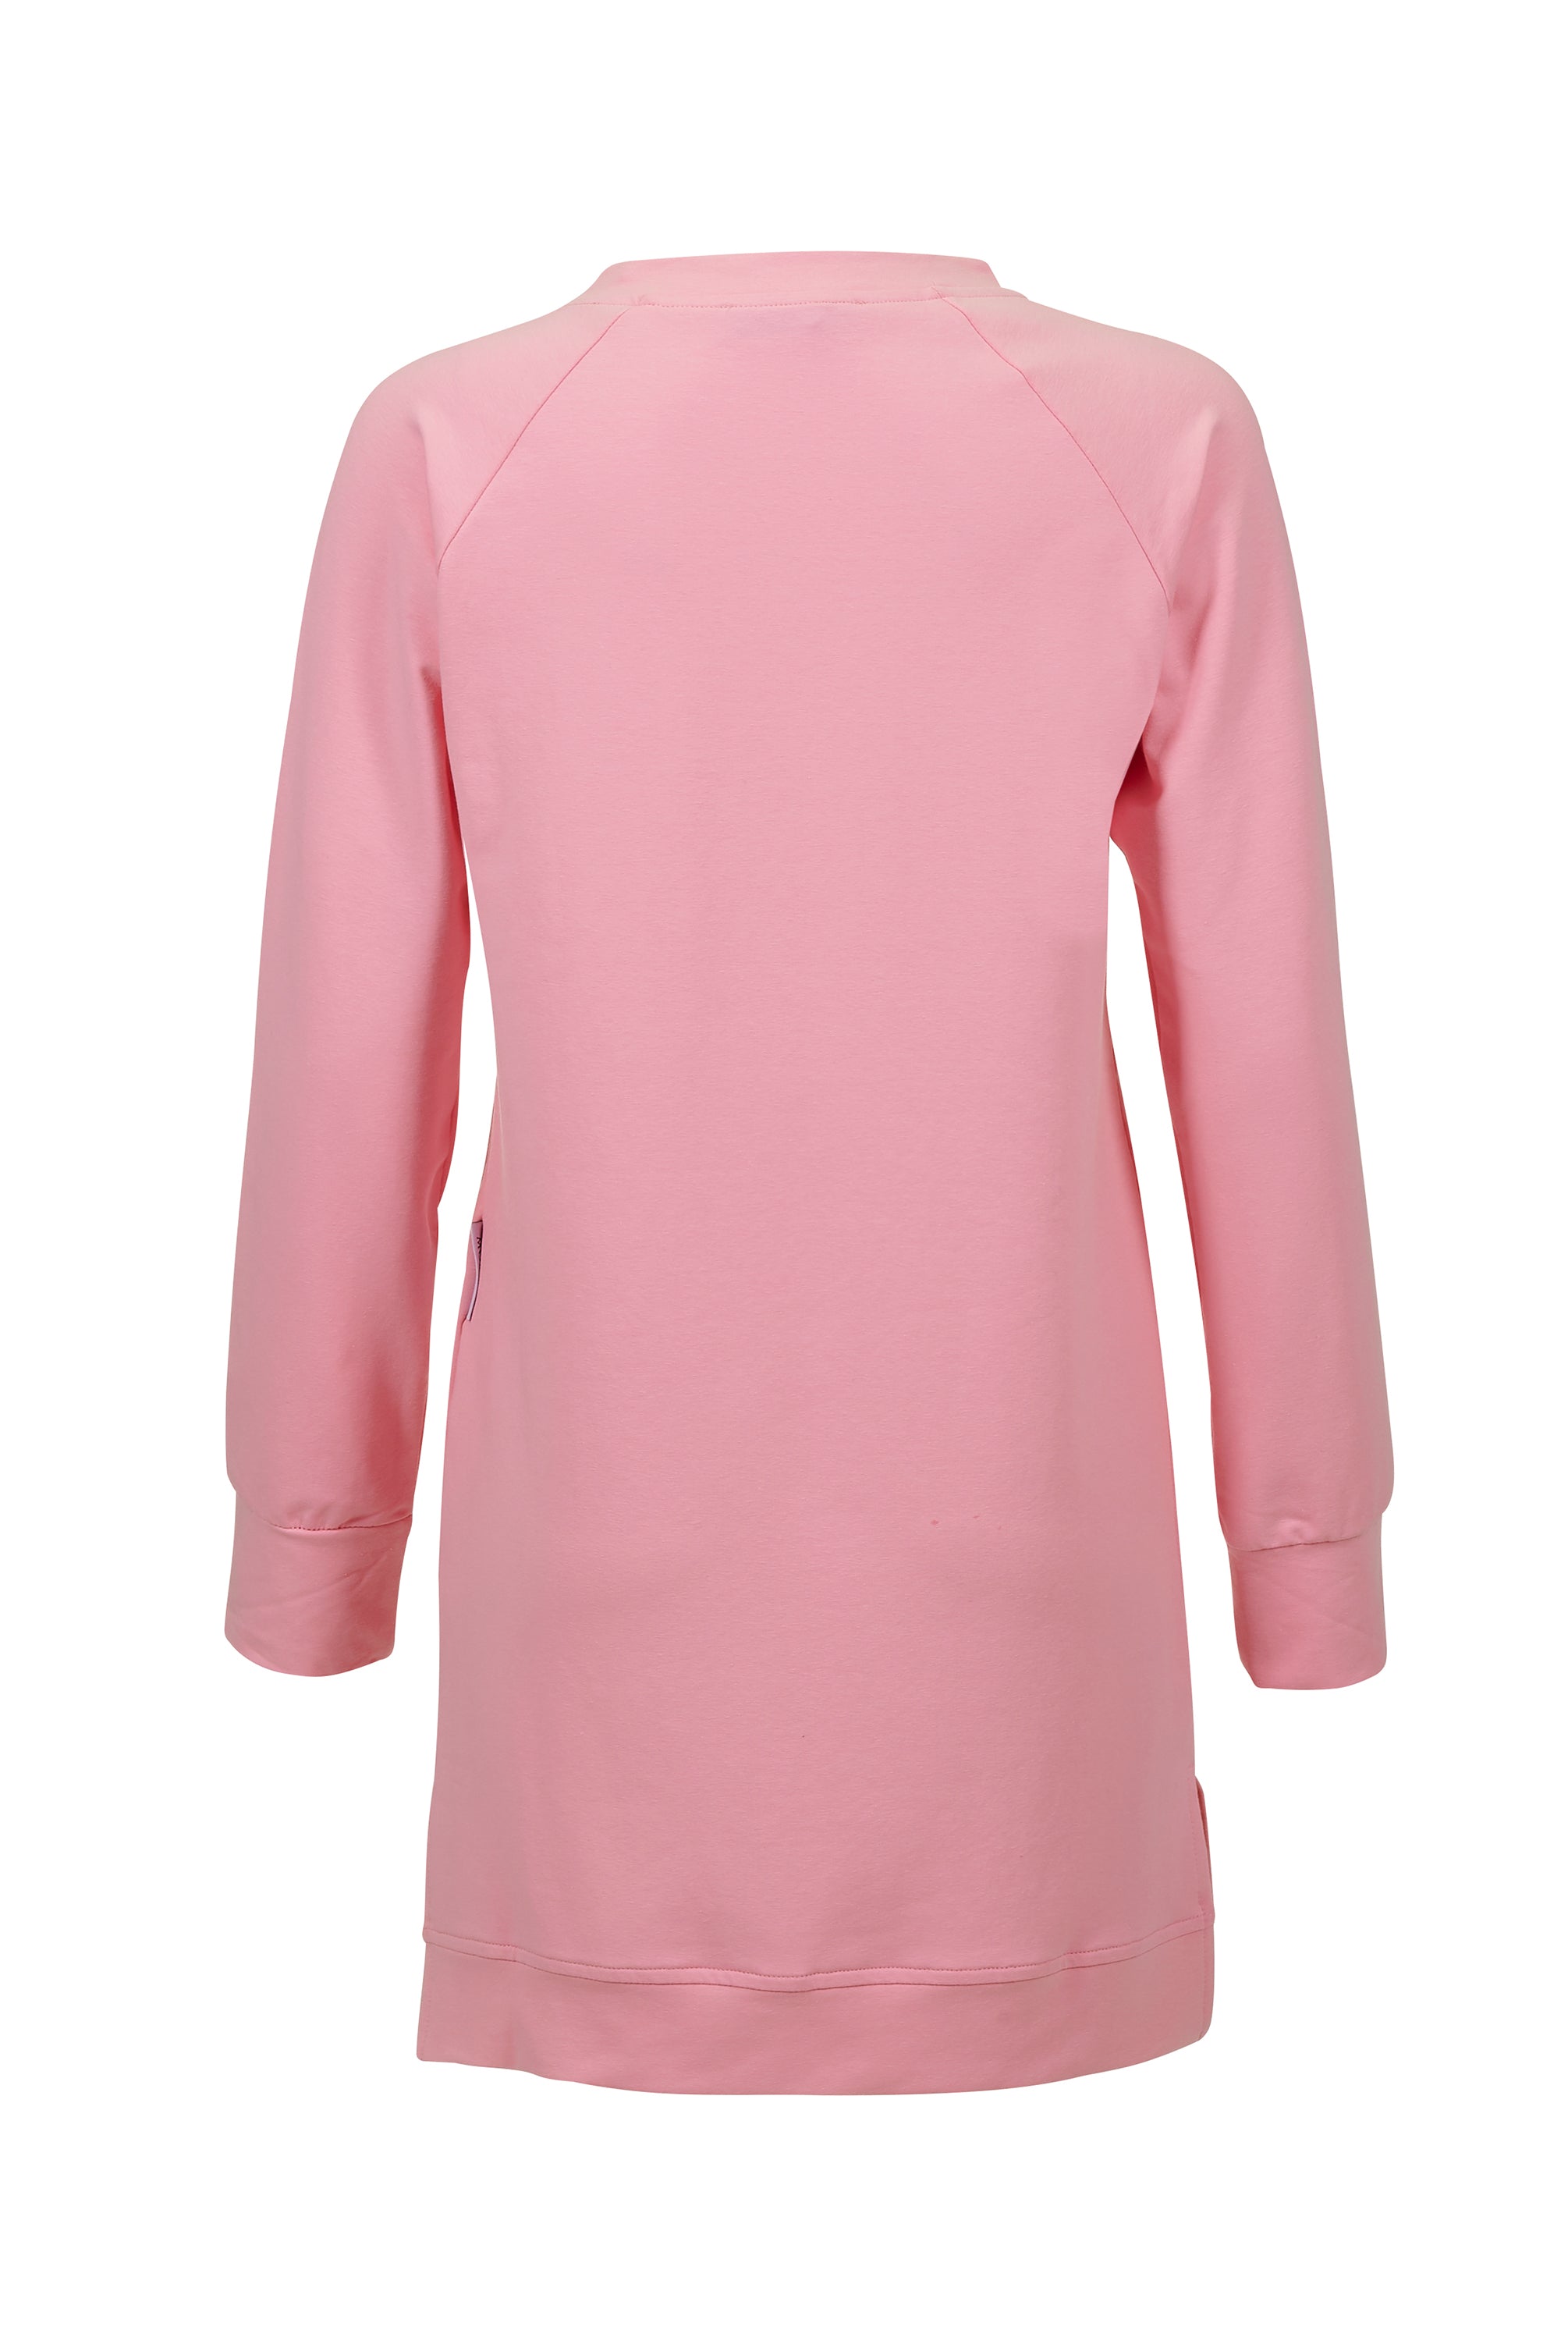 buy pink longline sweatshirt